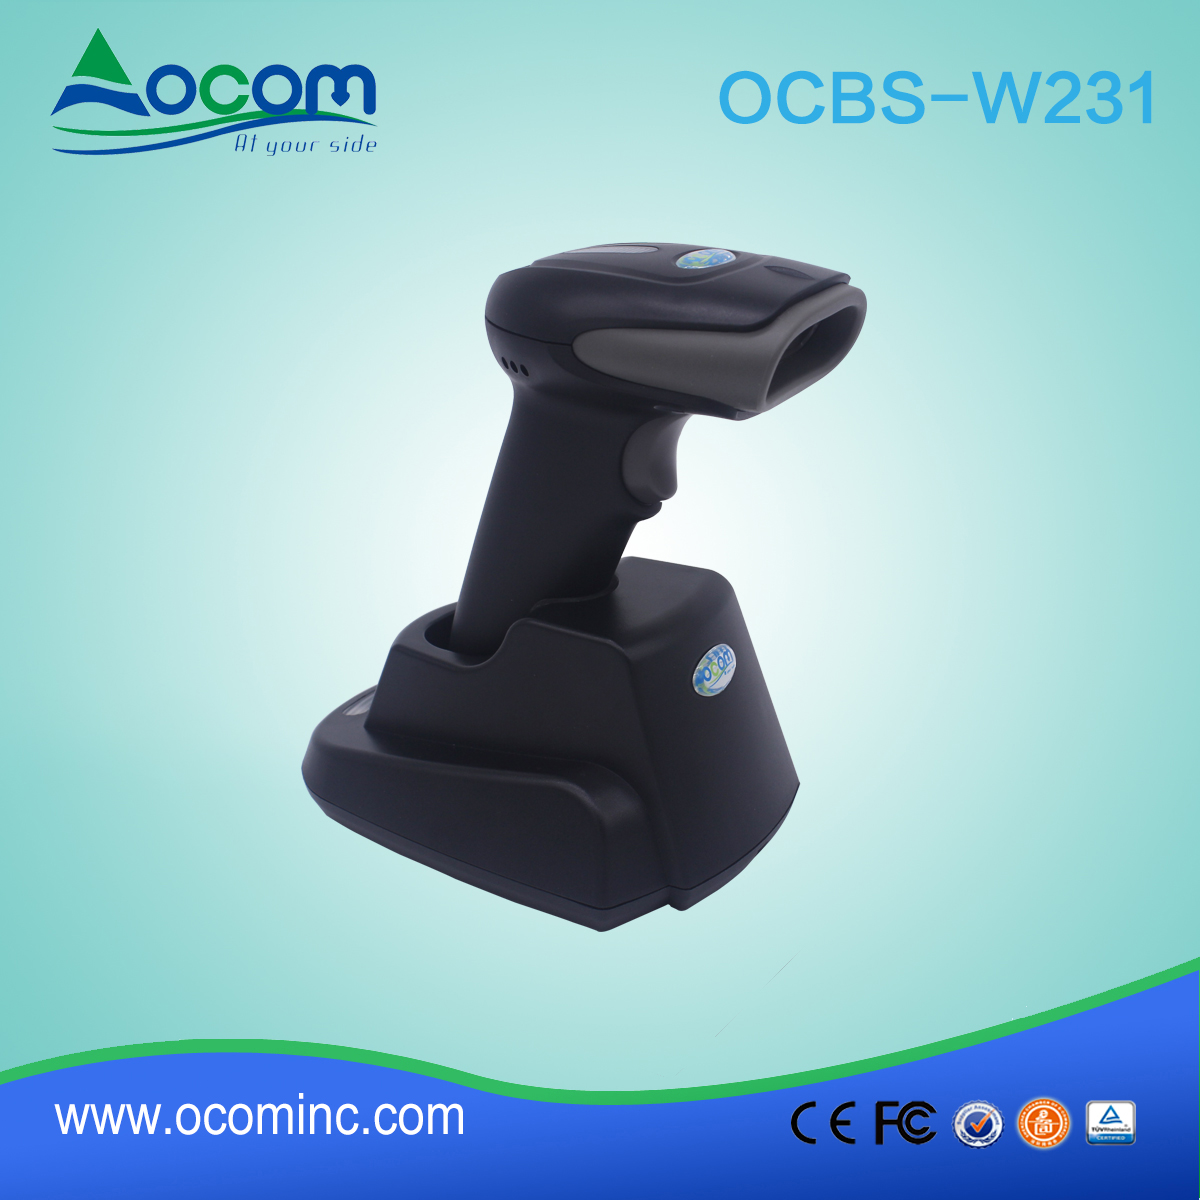 OCBS-W231 handheld Bluetooth USB Barcode Scanner para inventario